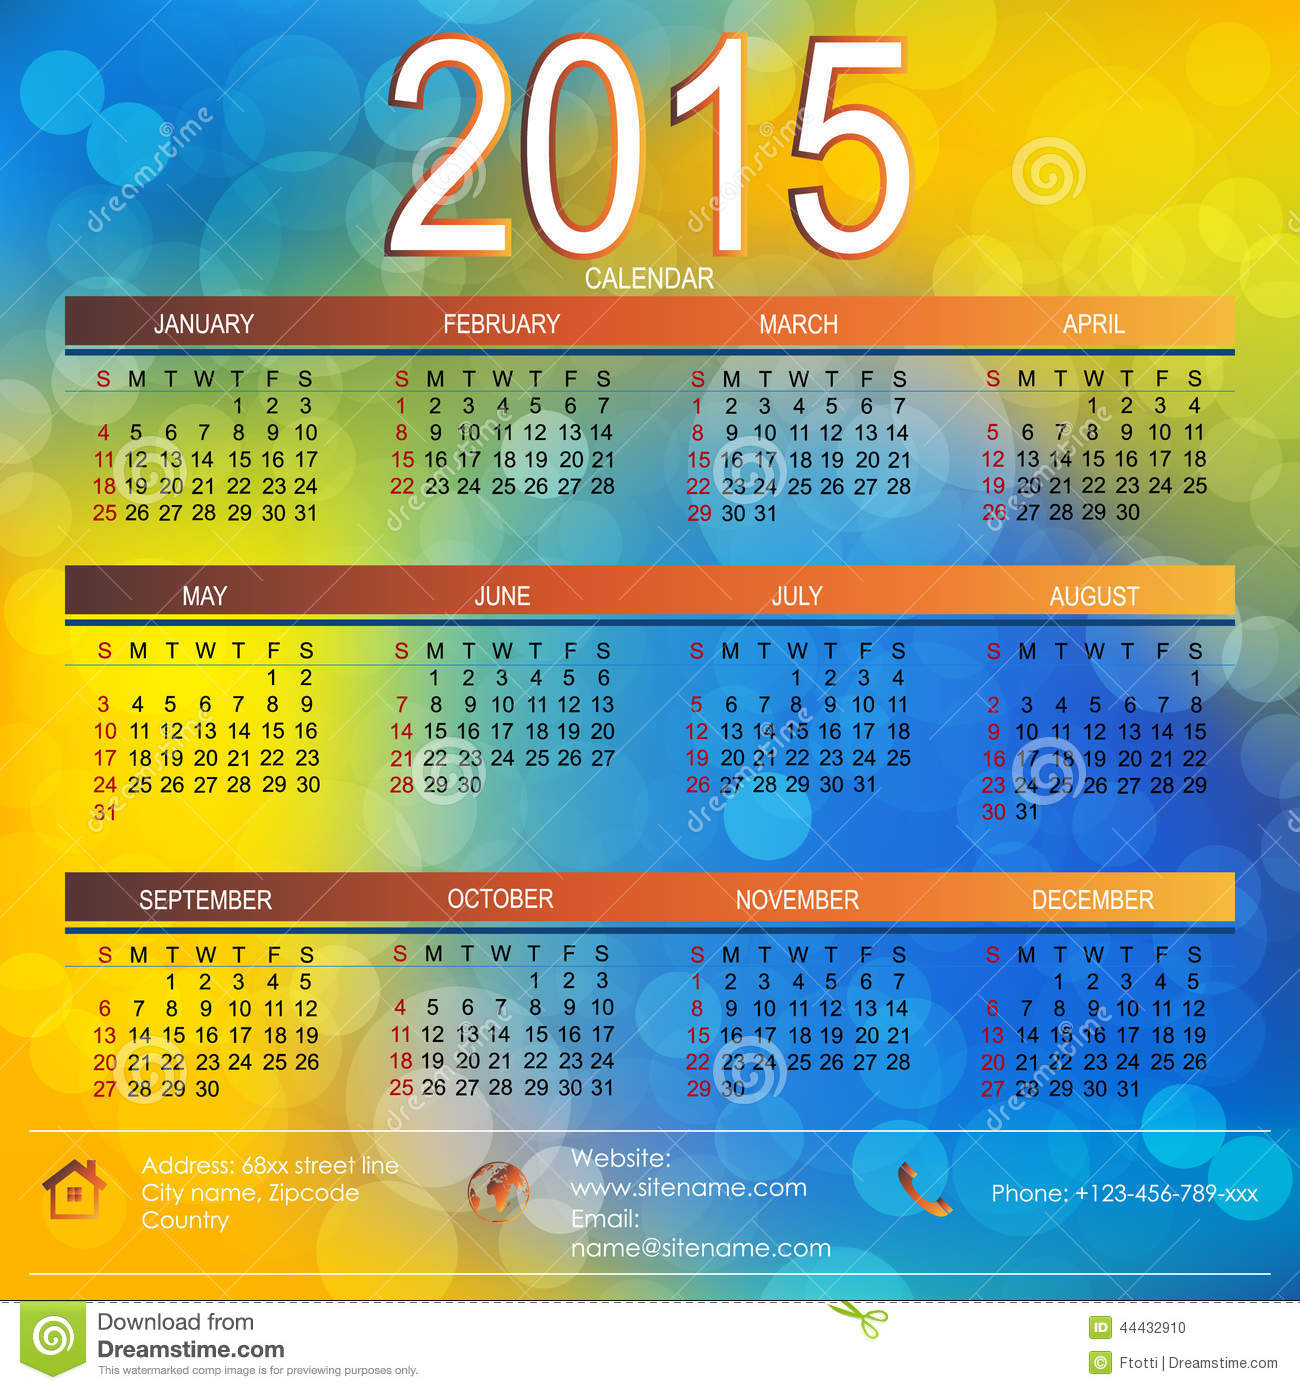 2105 Calendar Template